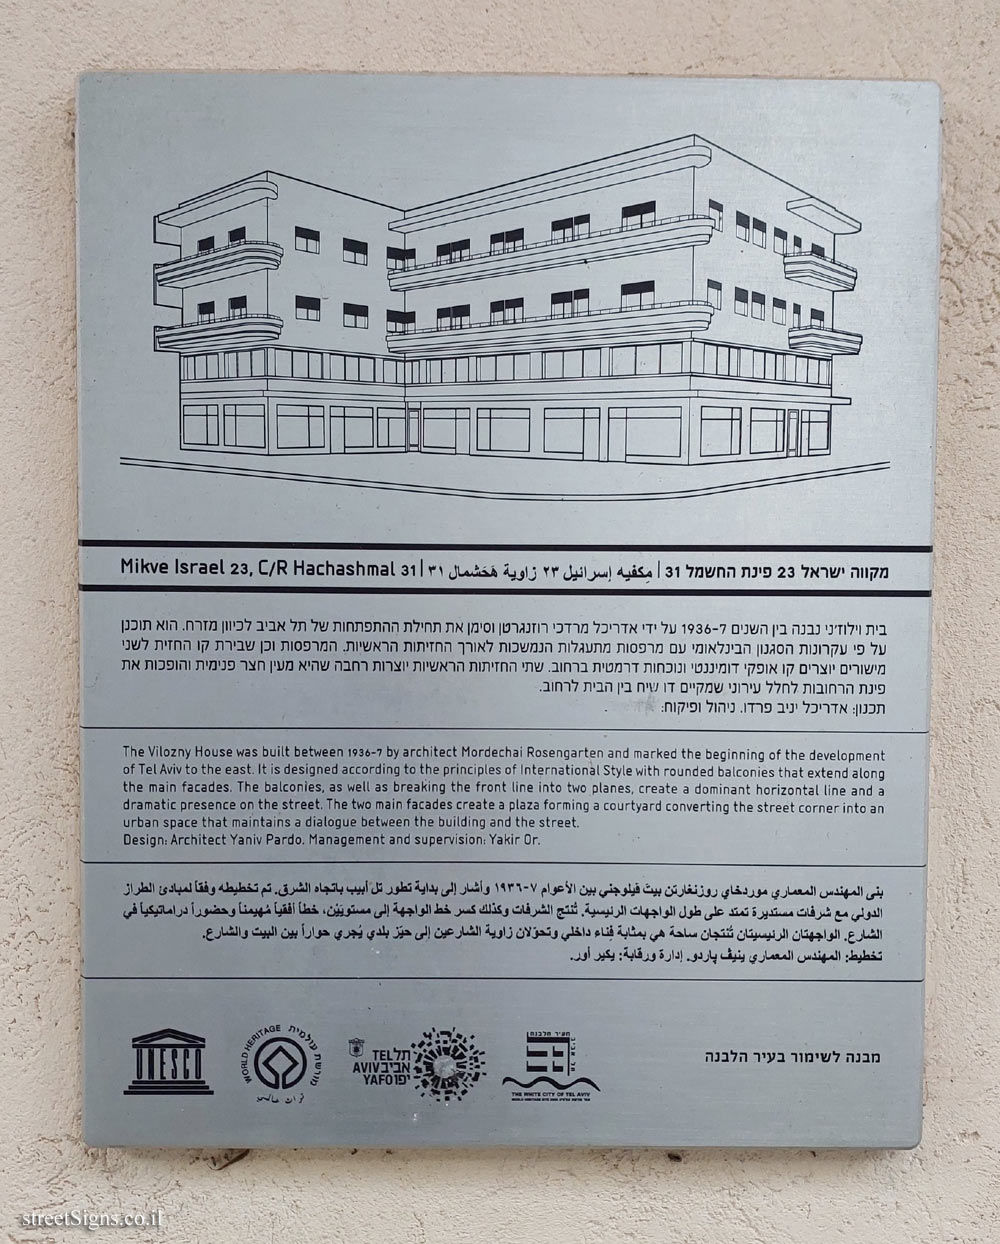 Tel Aviv - buildings for conservation - Mikve Israel 23, C/R Hachashmal 31